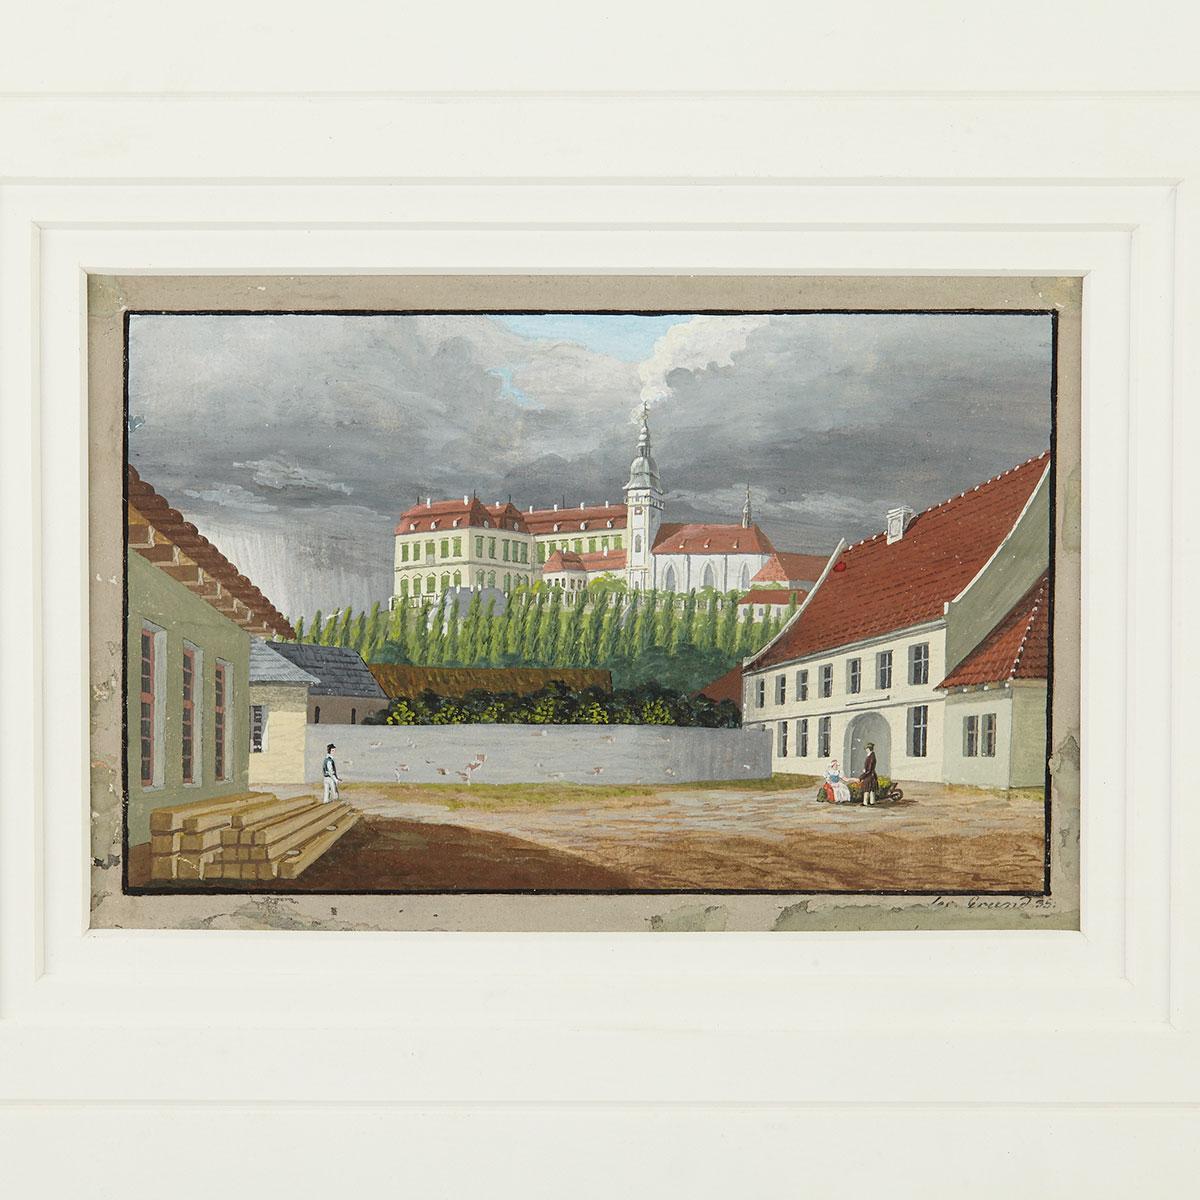 Miniature Watercolour of a Town Square by Franz Friedrich Alexander Grund (Polish, 1814-1898), 1835